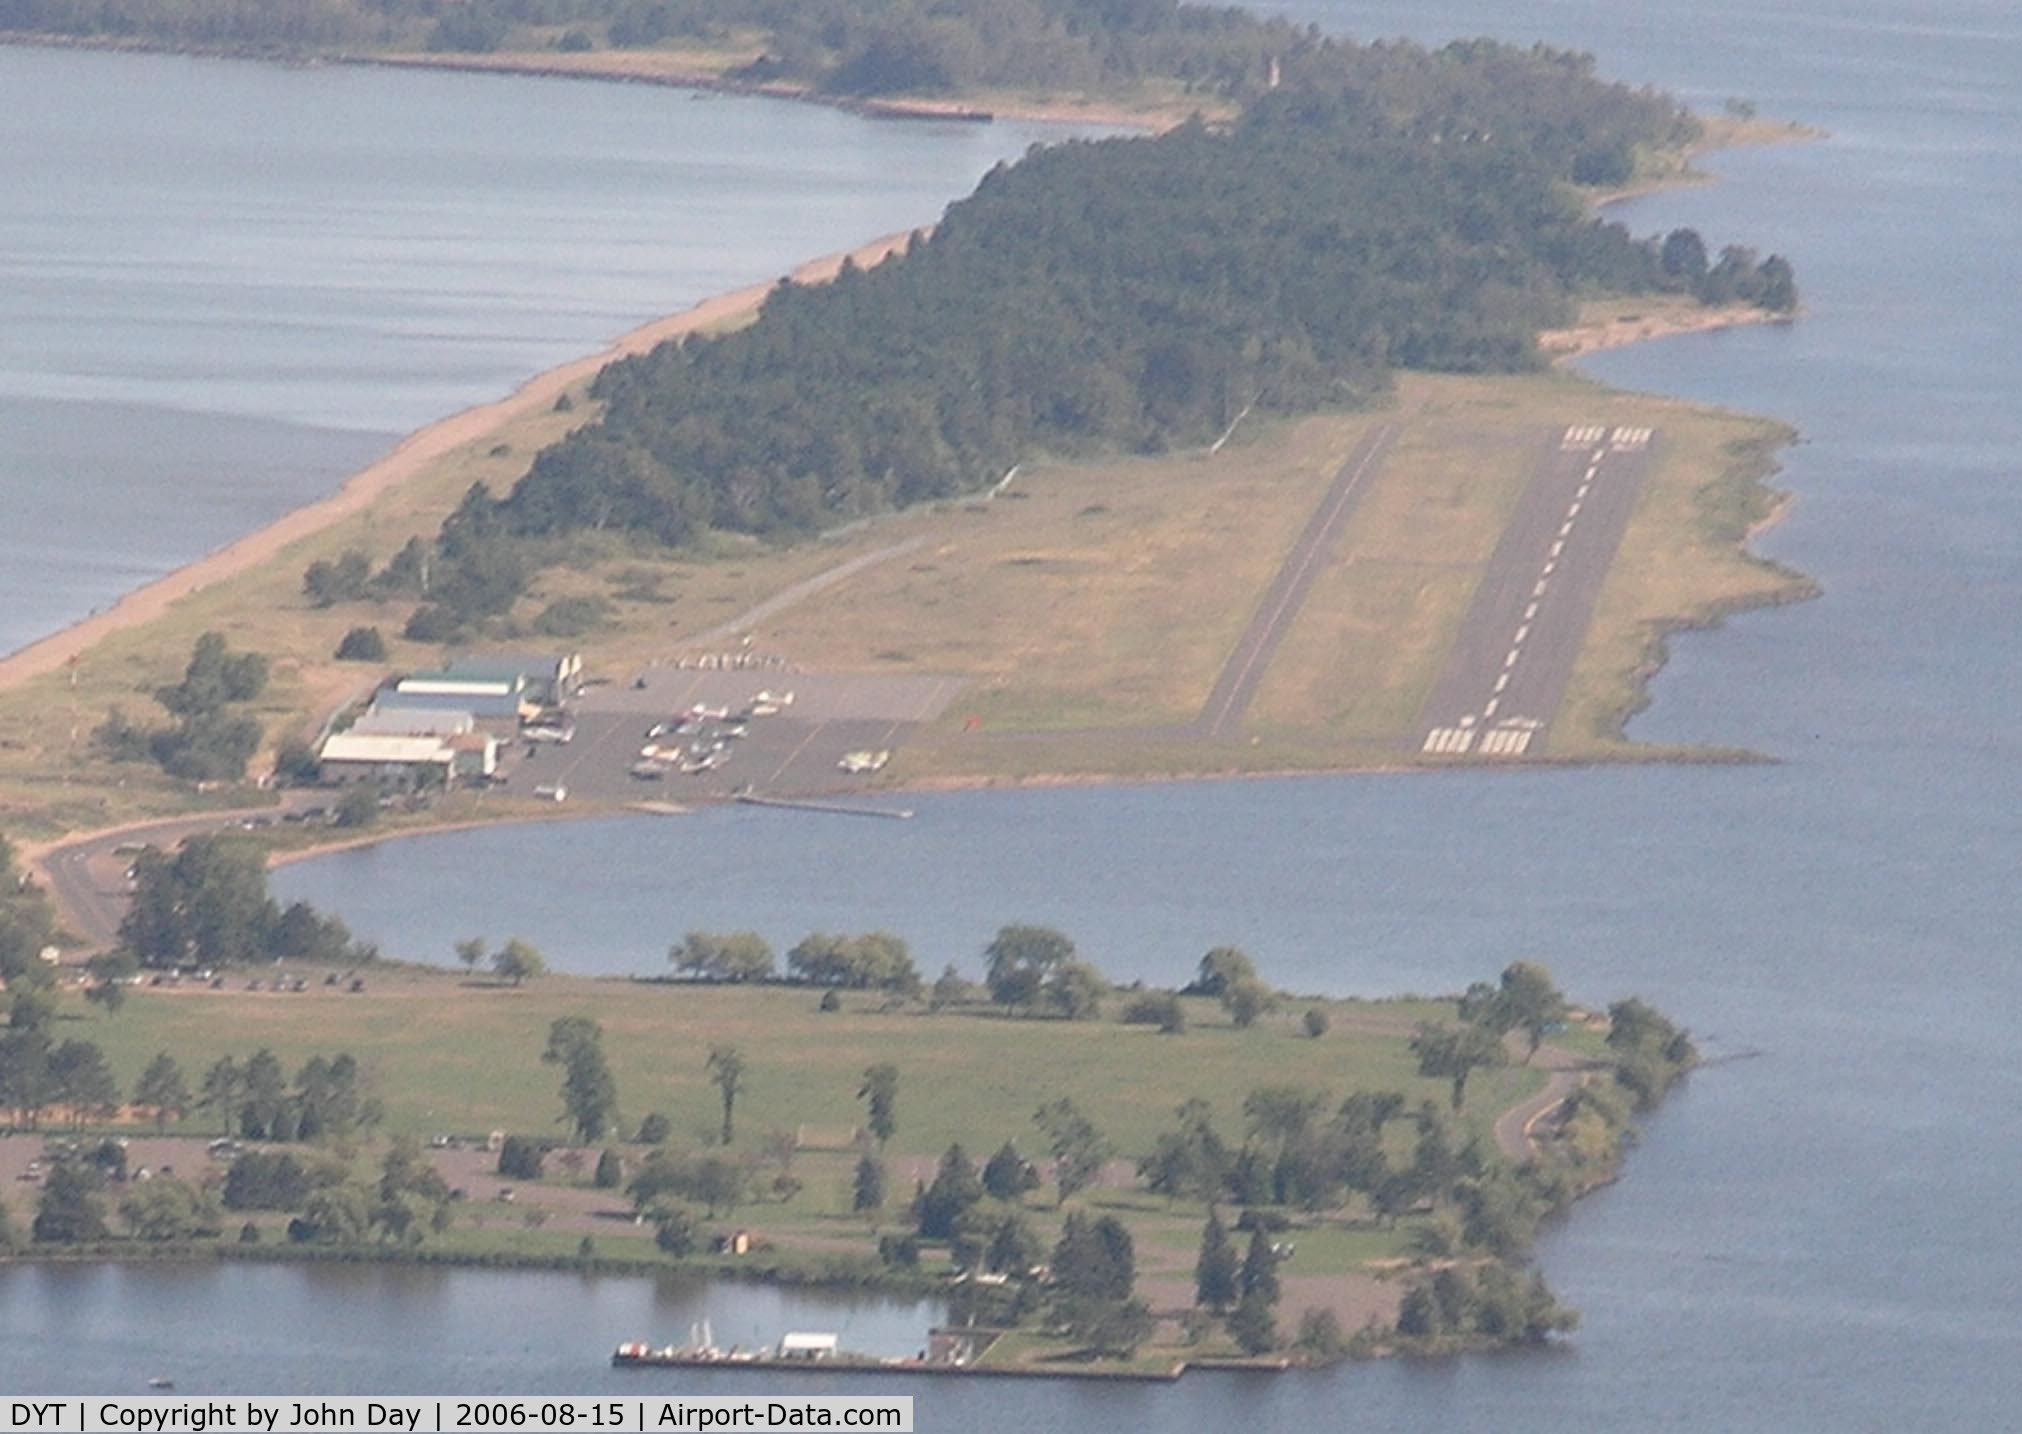 Sky Harbor Airport (DYT) - MN seaplane base